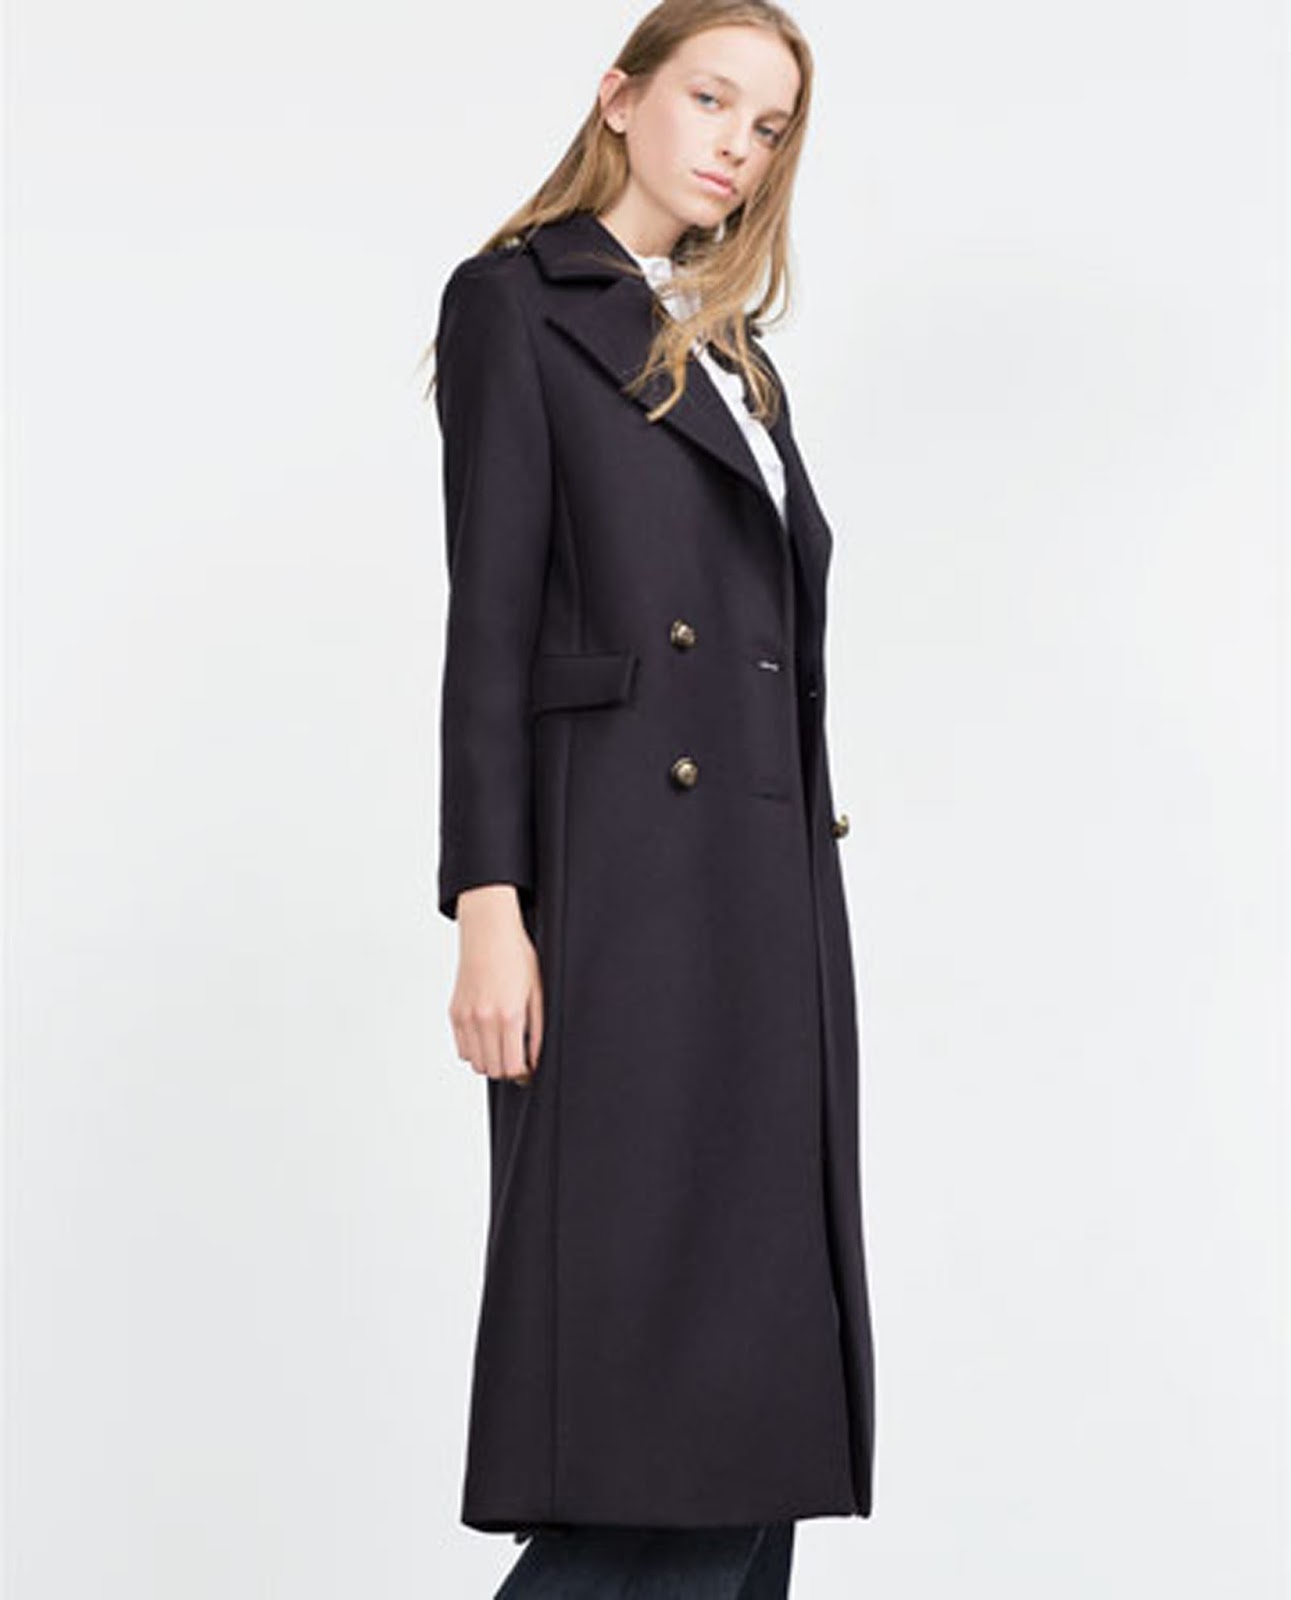 Eniwhere Fashion - Zara's Wishlist - Natale - coat